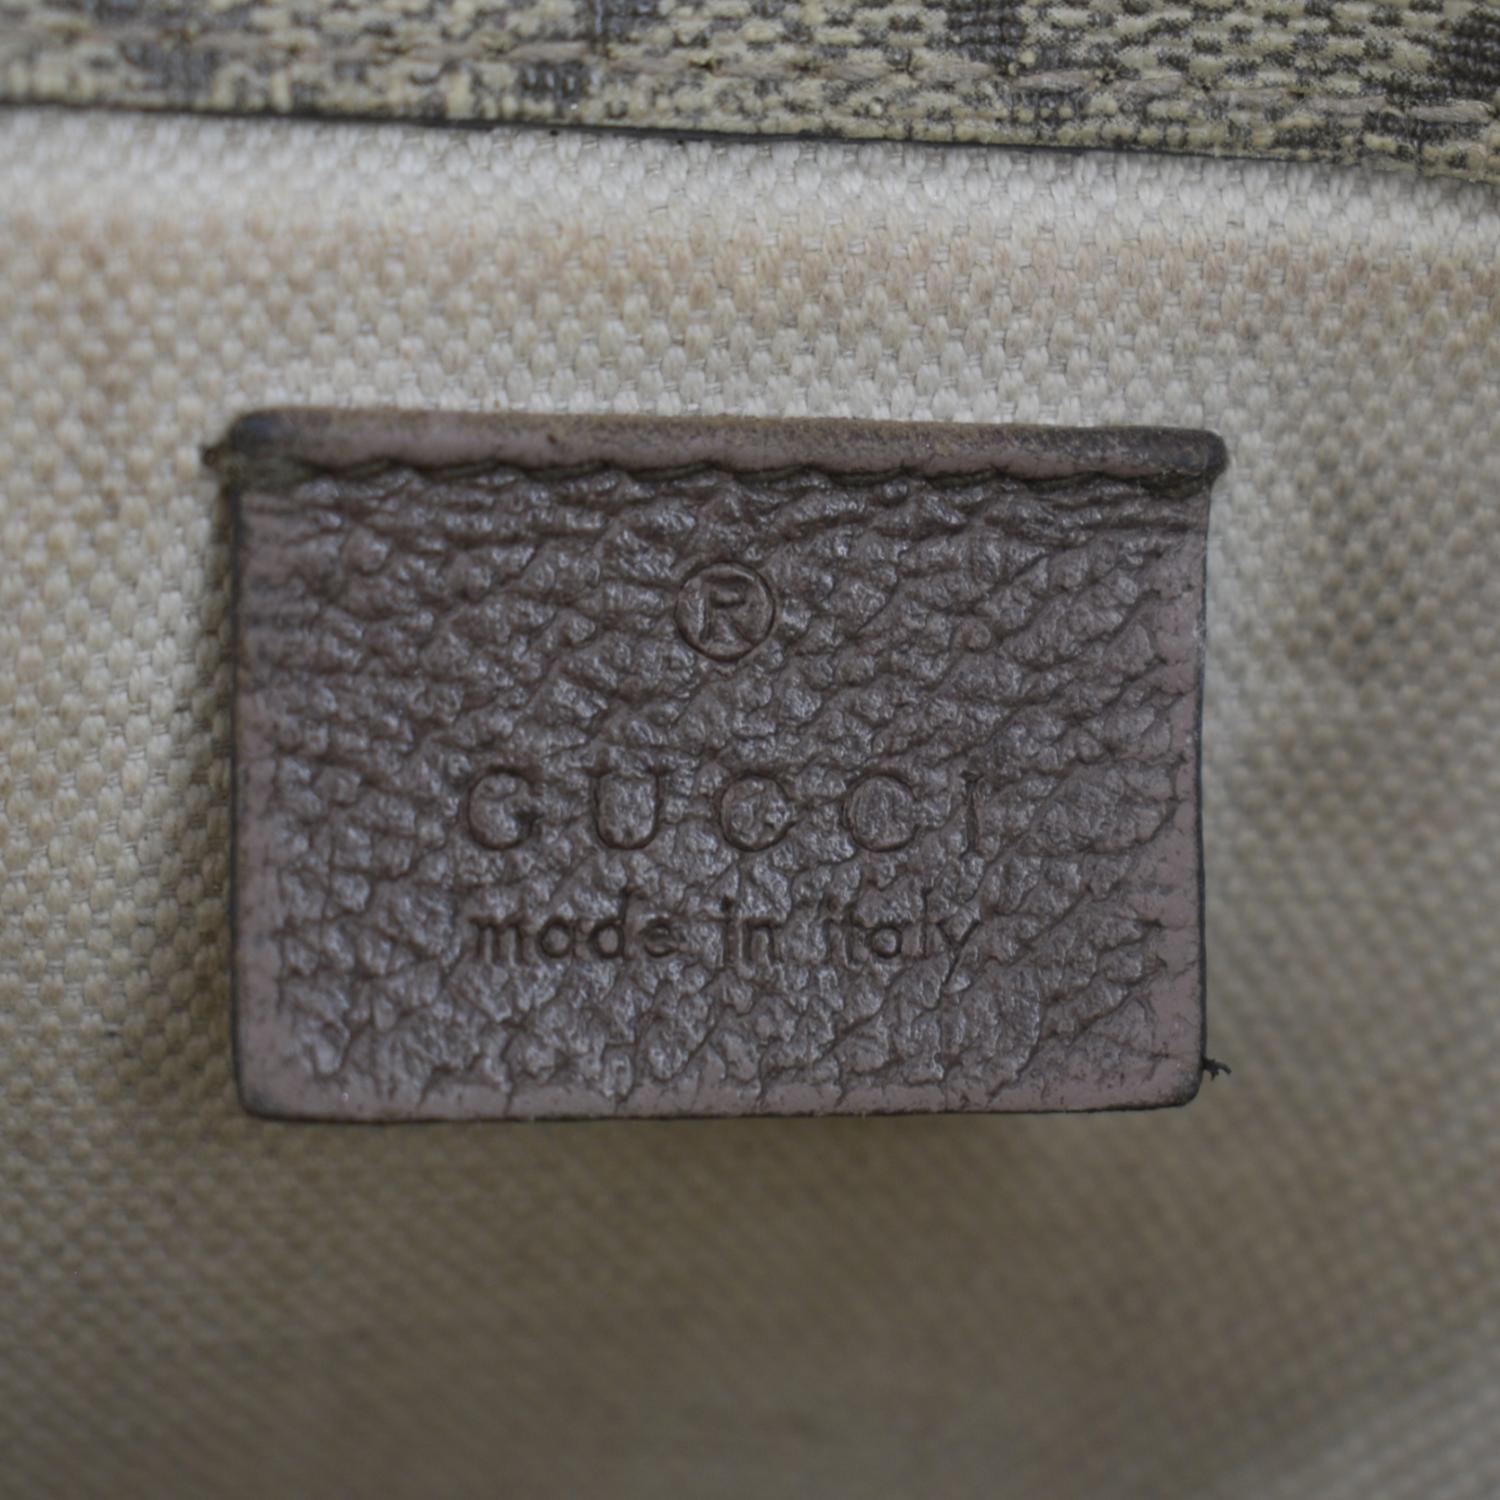 Gucci Neo Vintage Belt Bag - Couture USA